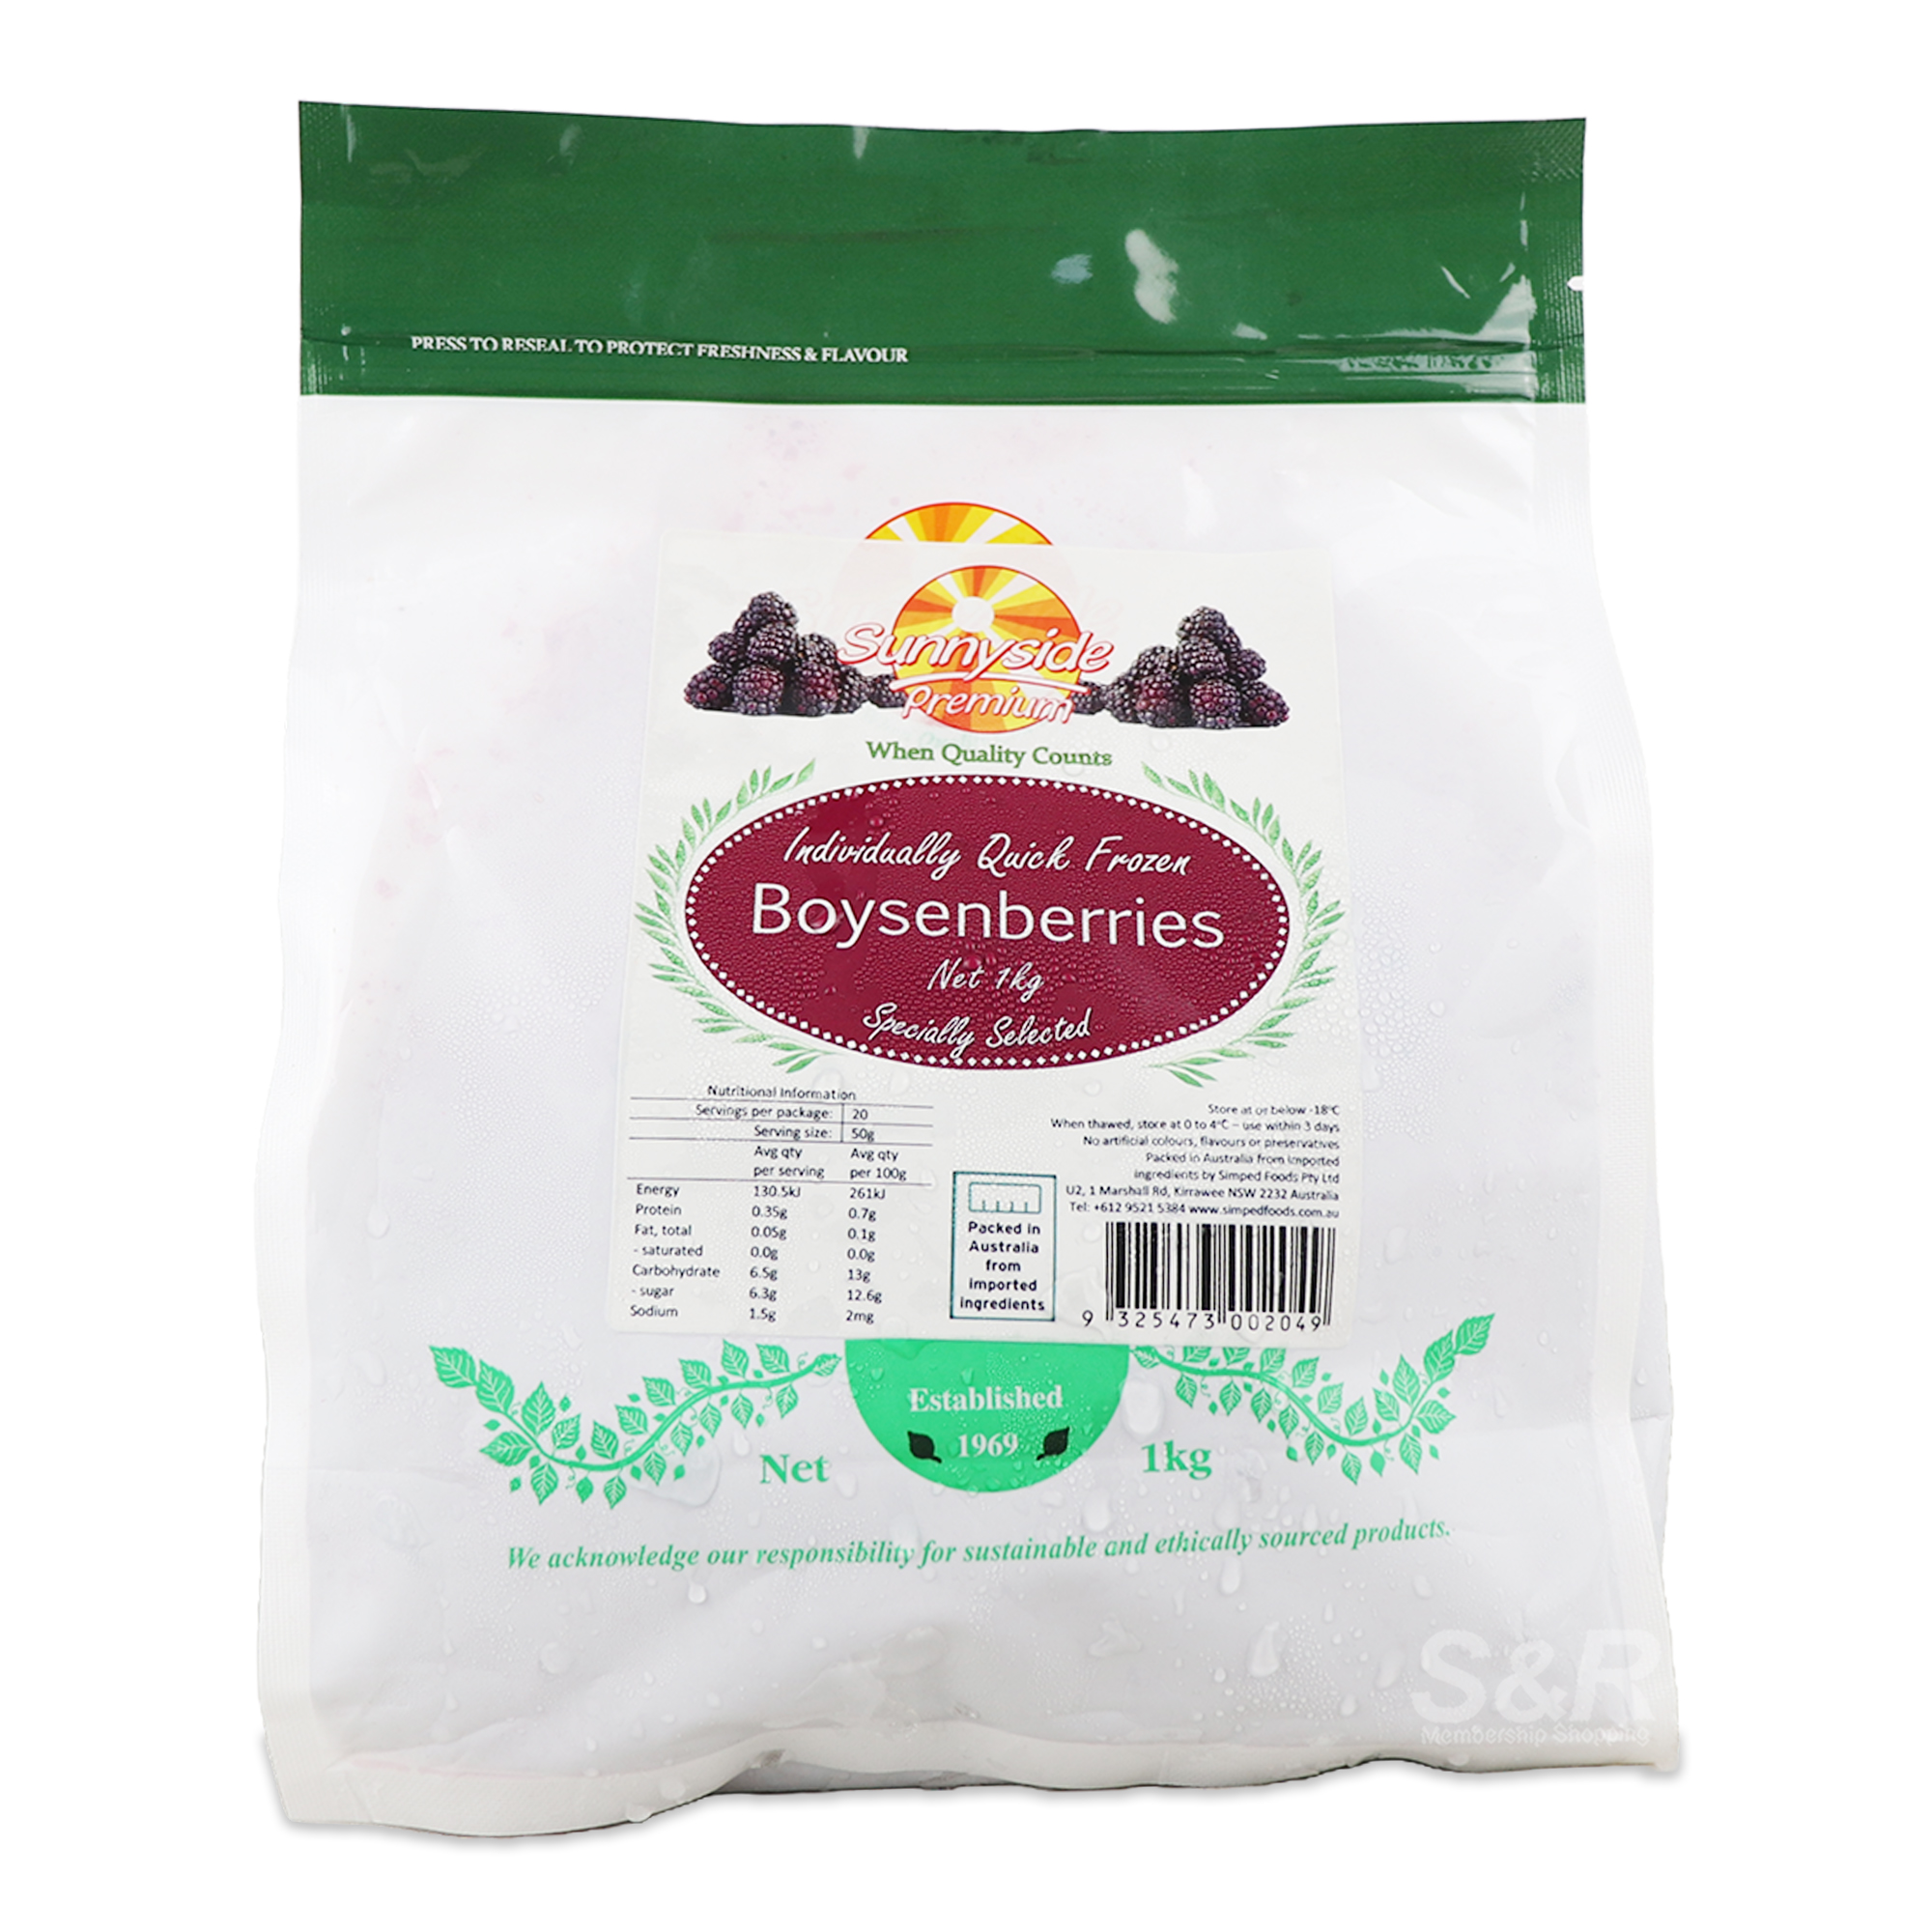 Sunnyside Premium Boysenberries 1kg